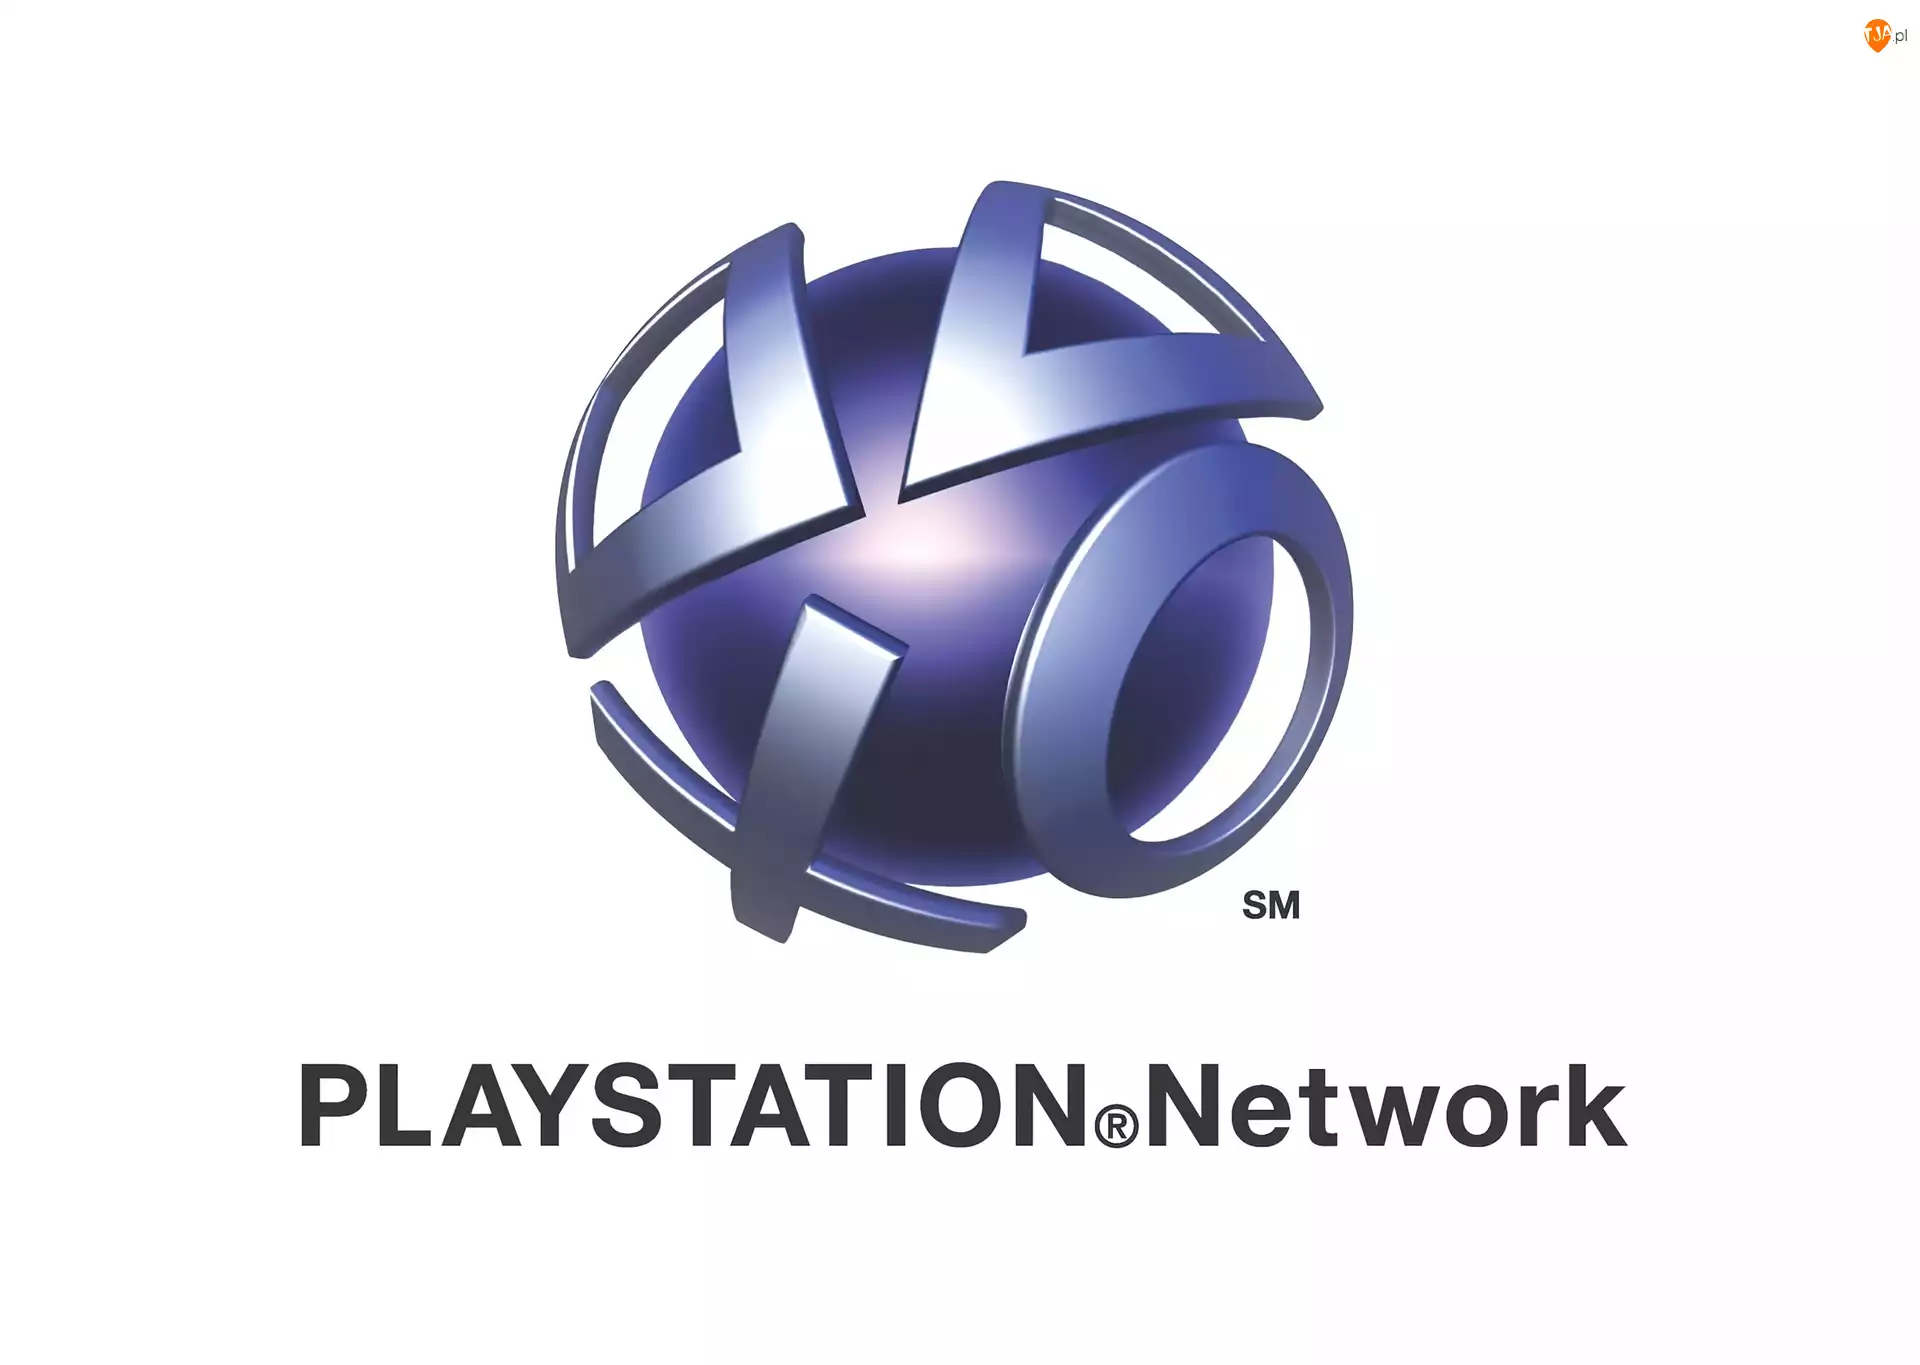 Sieć, Playstation, Network